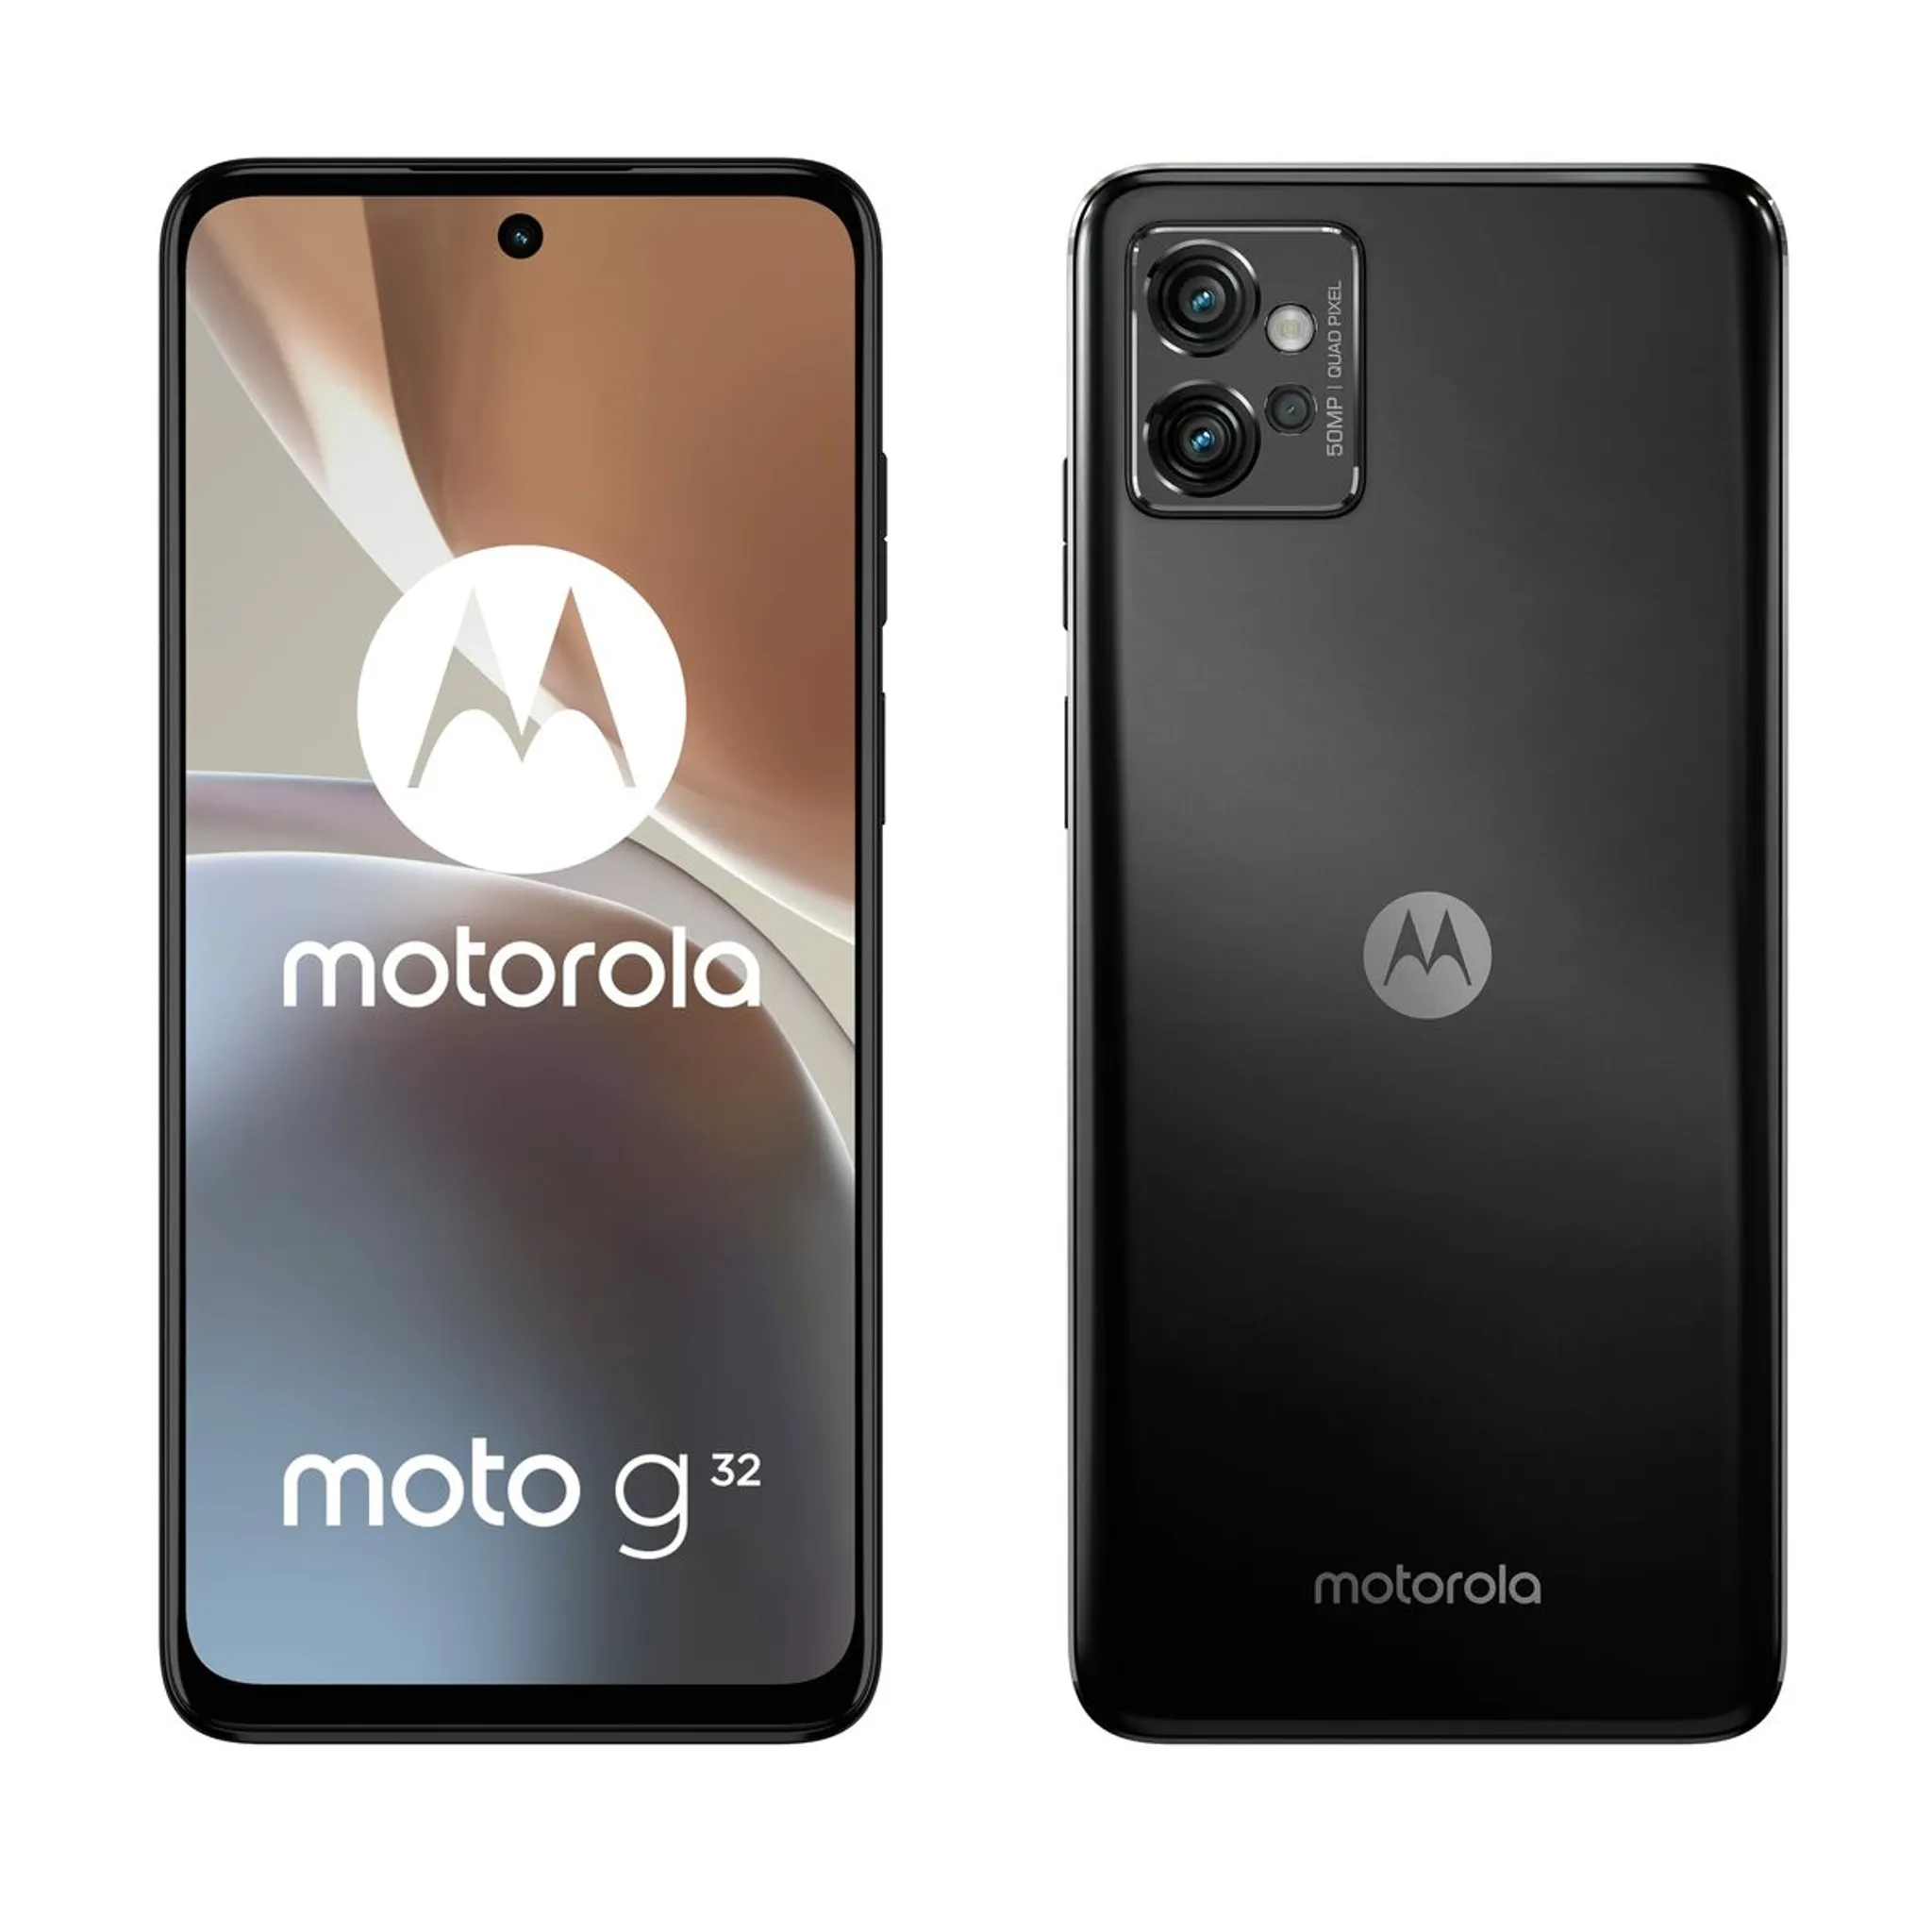 Smartphone Motorola Motorola Grau G32 Moto